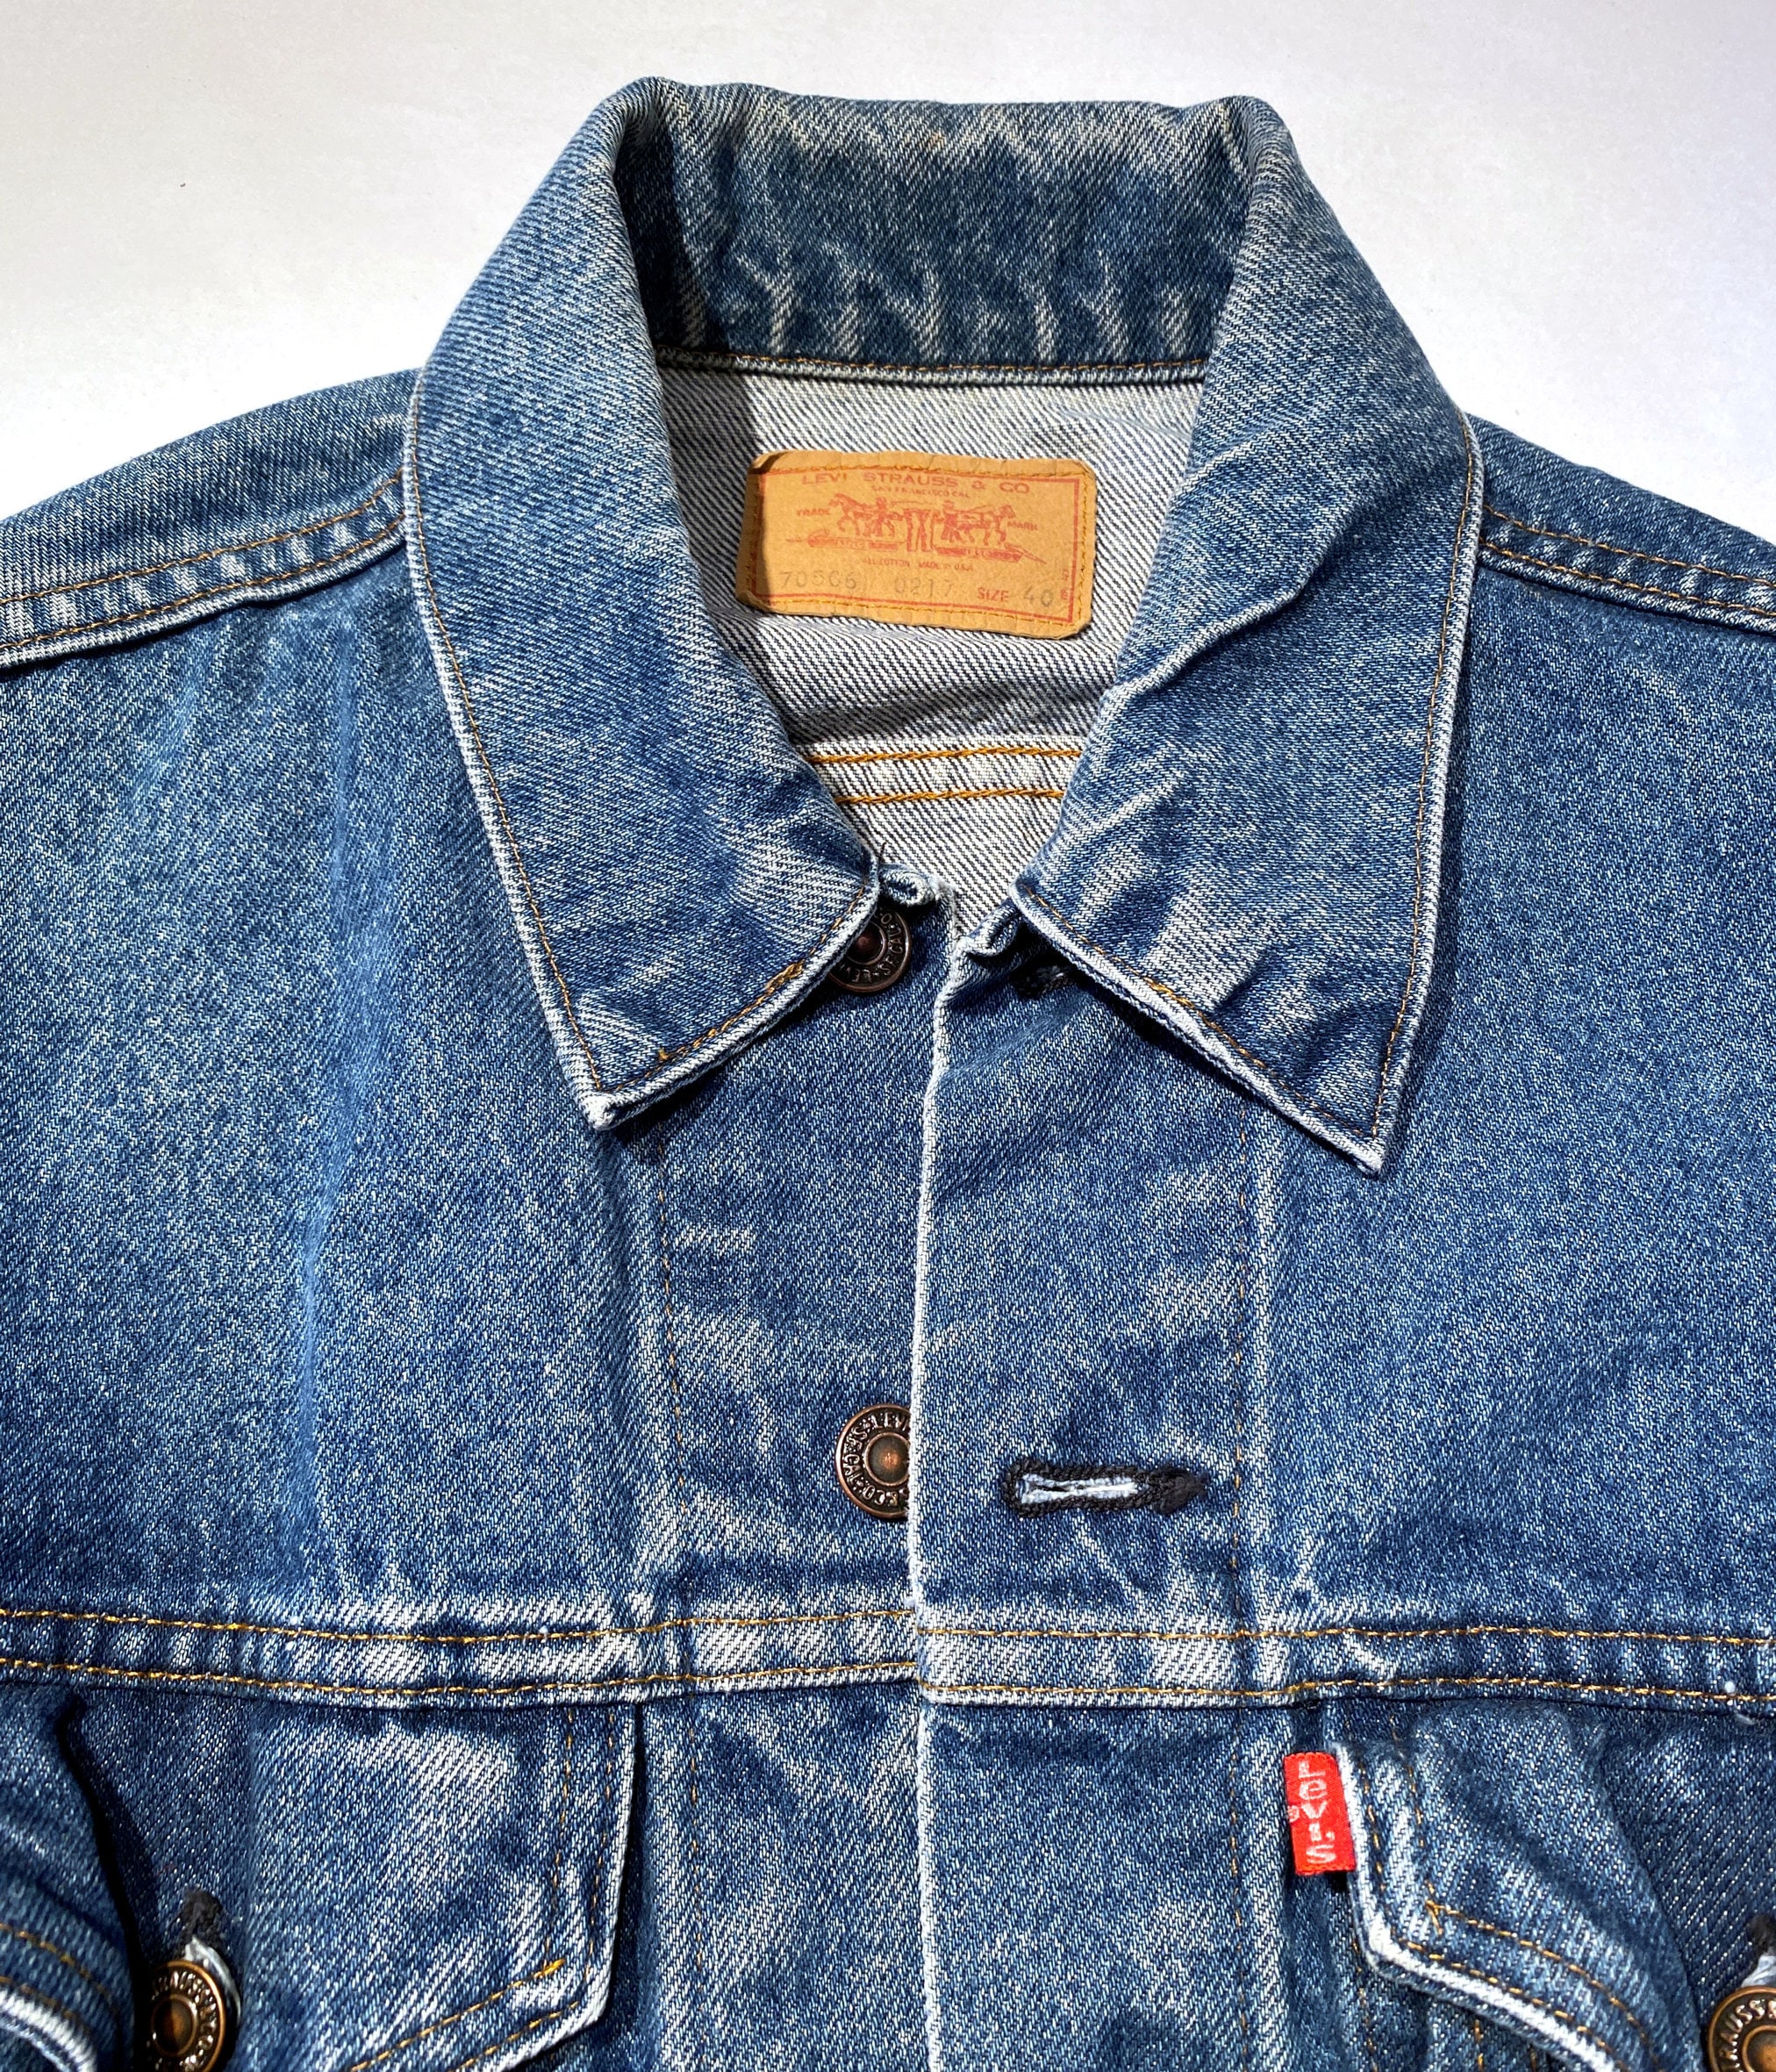 80s Levi's Denim Jacket M, Vintage Blue Jean Distressed Unisex 